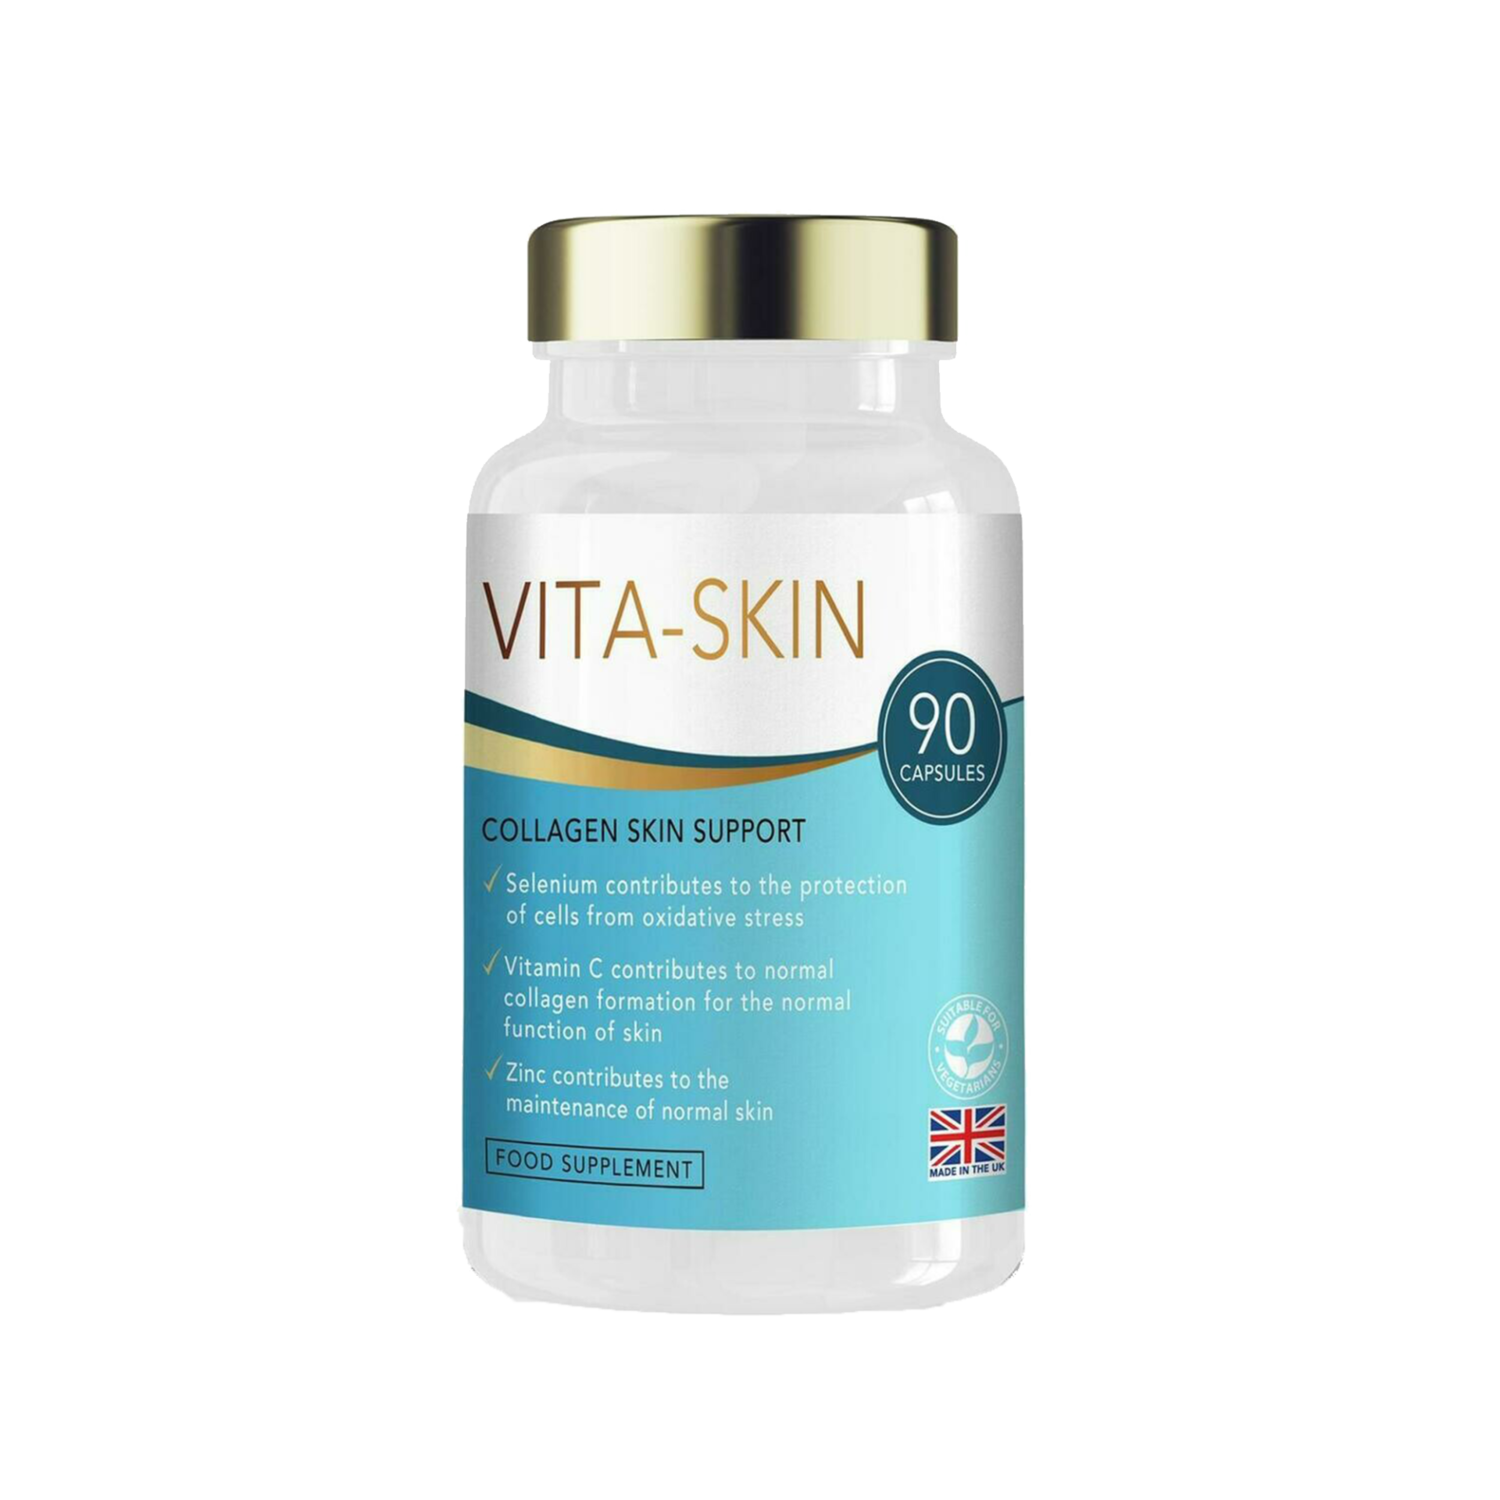 Vita-Skin